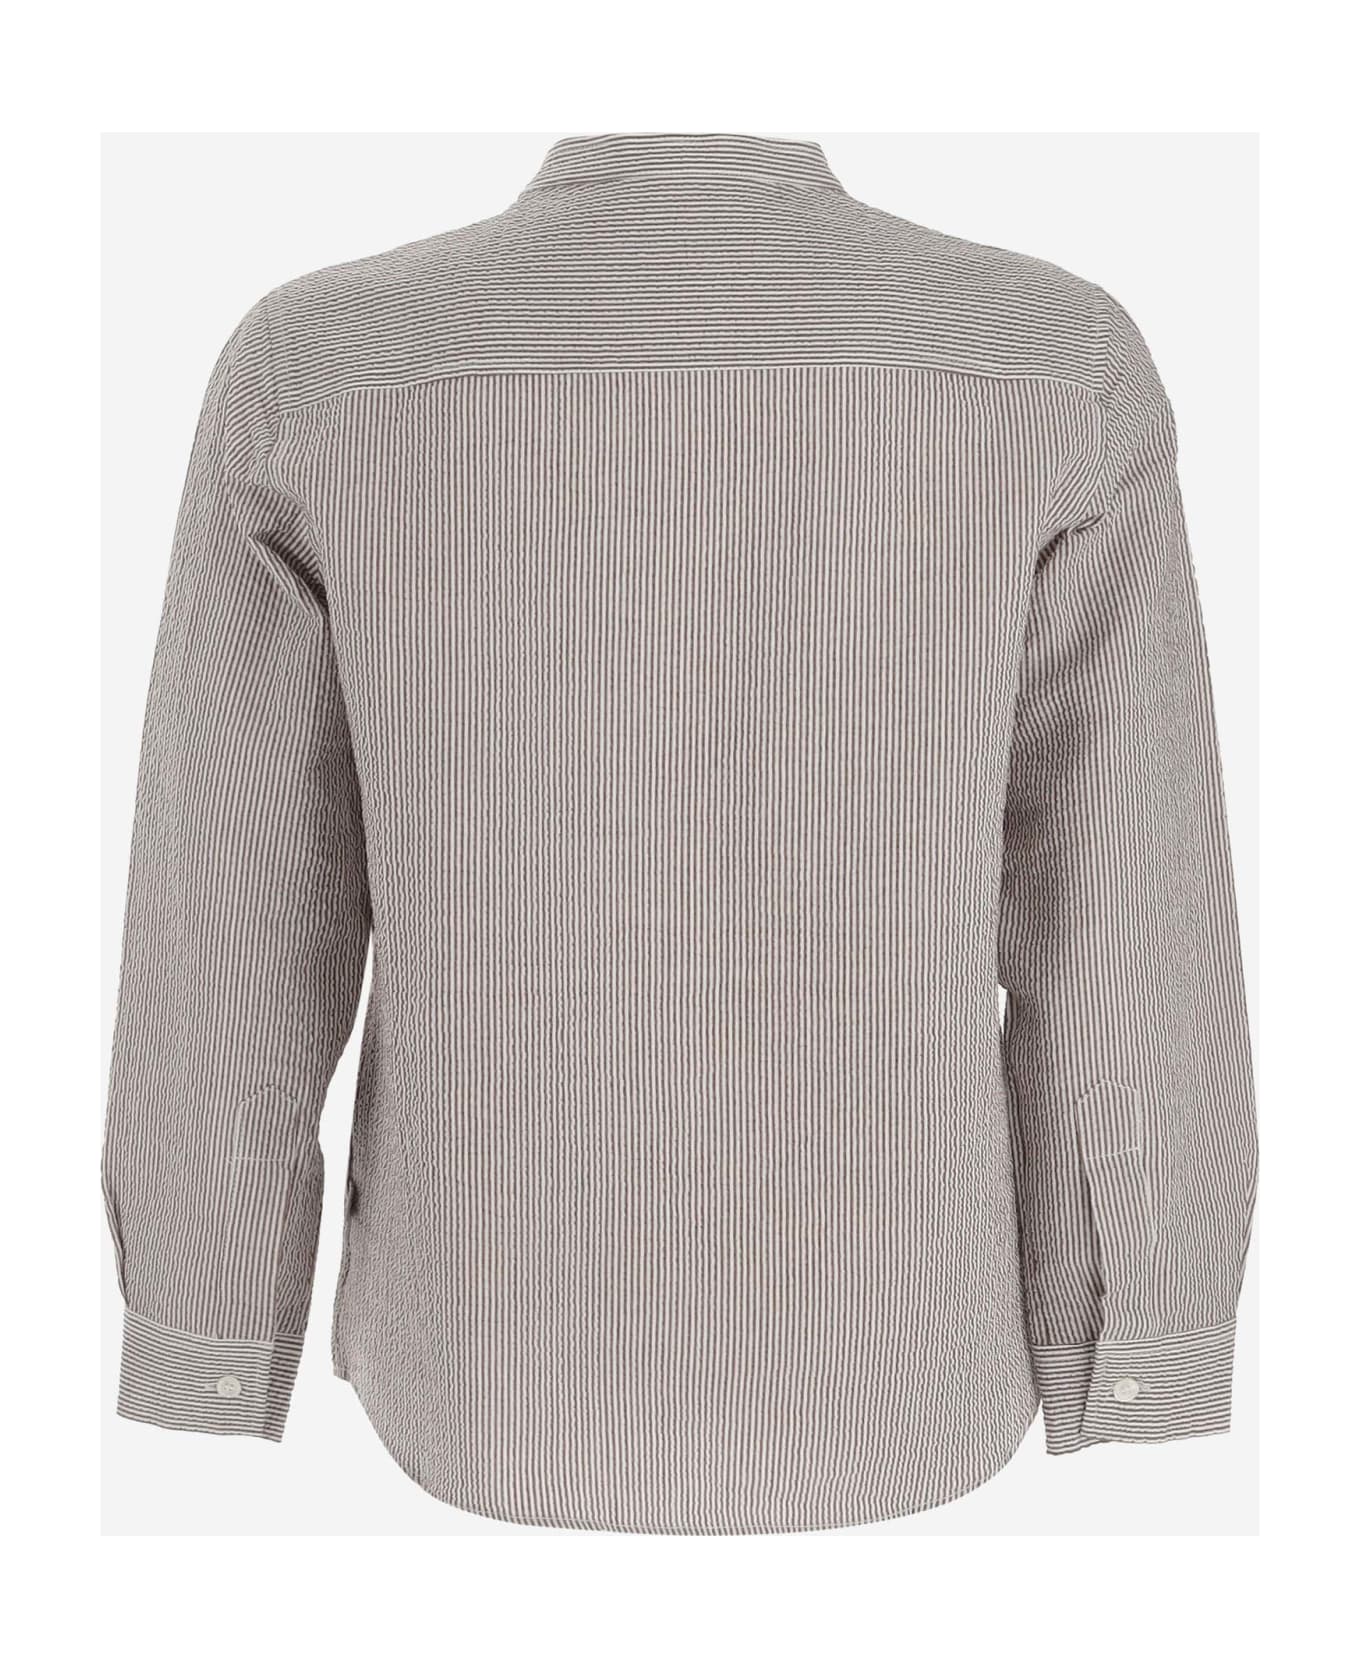 Il Gufo Stretch Cotton Shirt With Striped Pattern - Beige シャツ